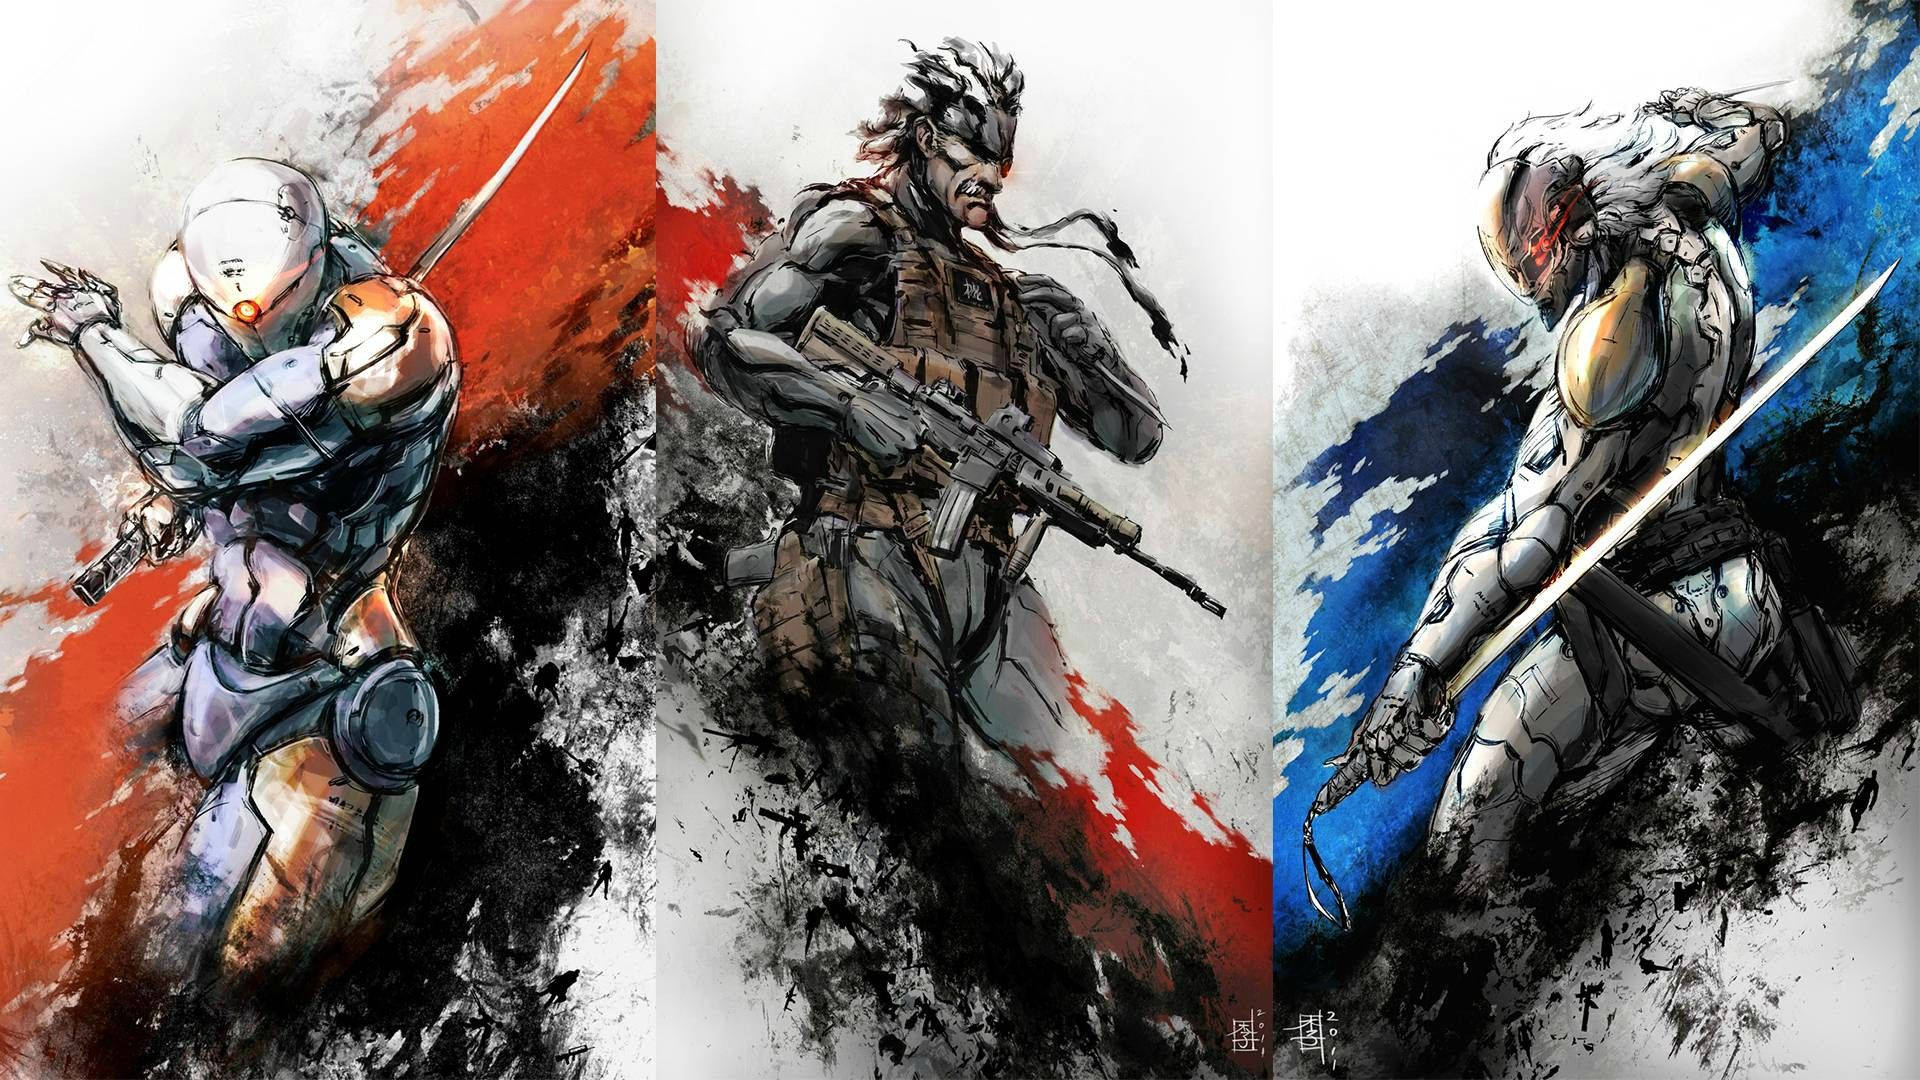 Three Cyborg Ninjas battling it out in the Metal Gear Solid universe Wallpaper